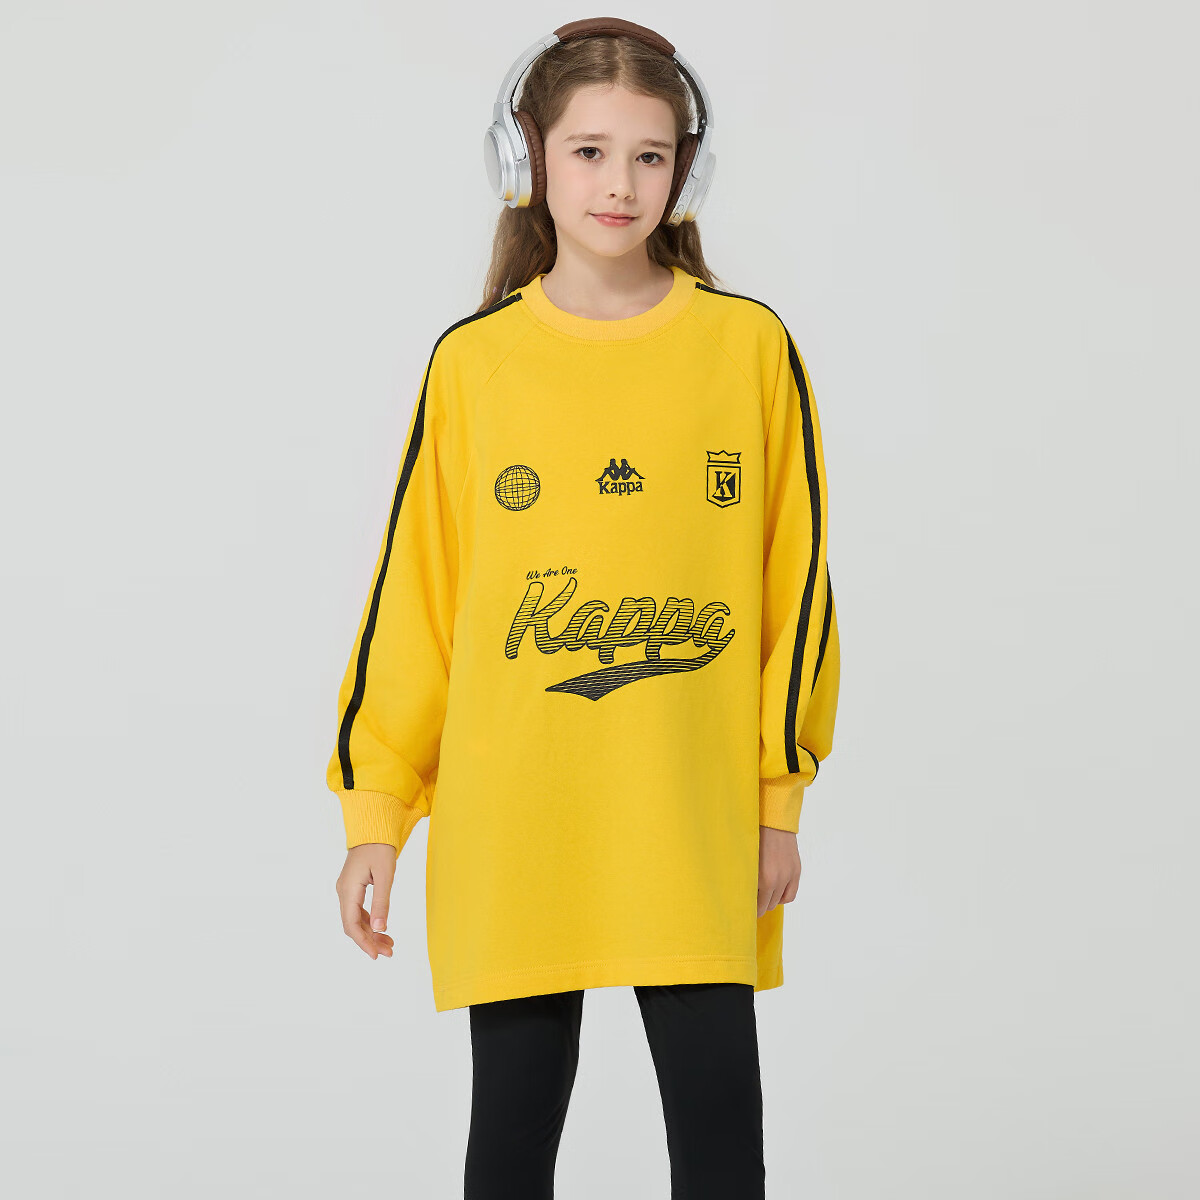 Kappa Kids卡帕童装中大童春季卫衣裙女款时尚舒适百搭长袖上衣 姜黄色 130